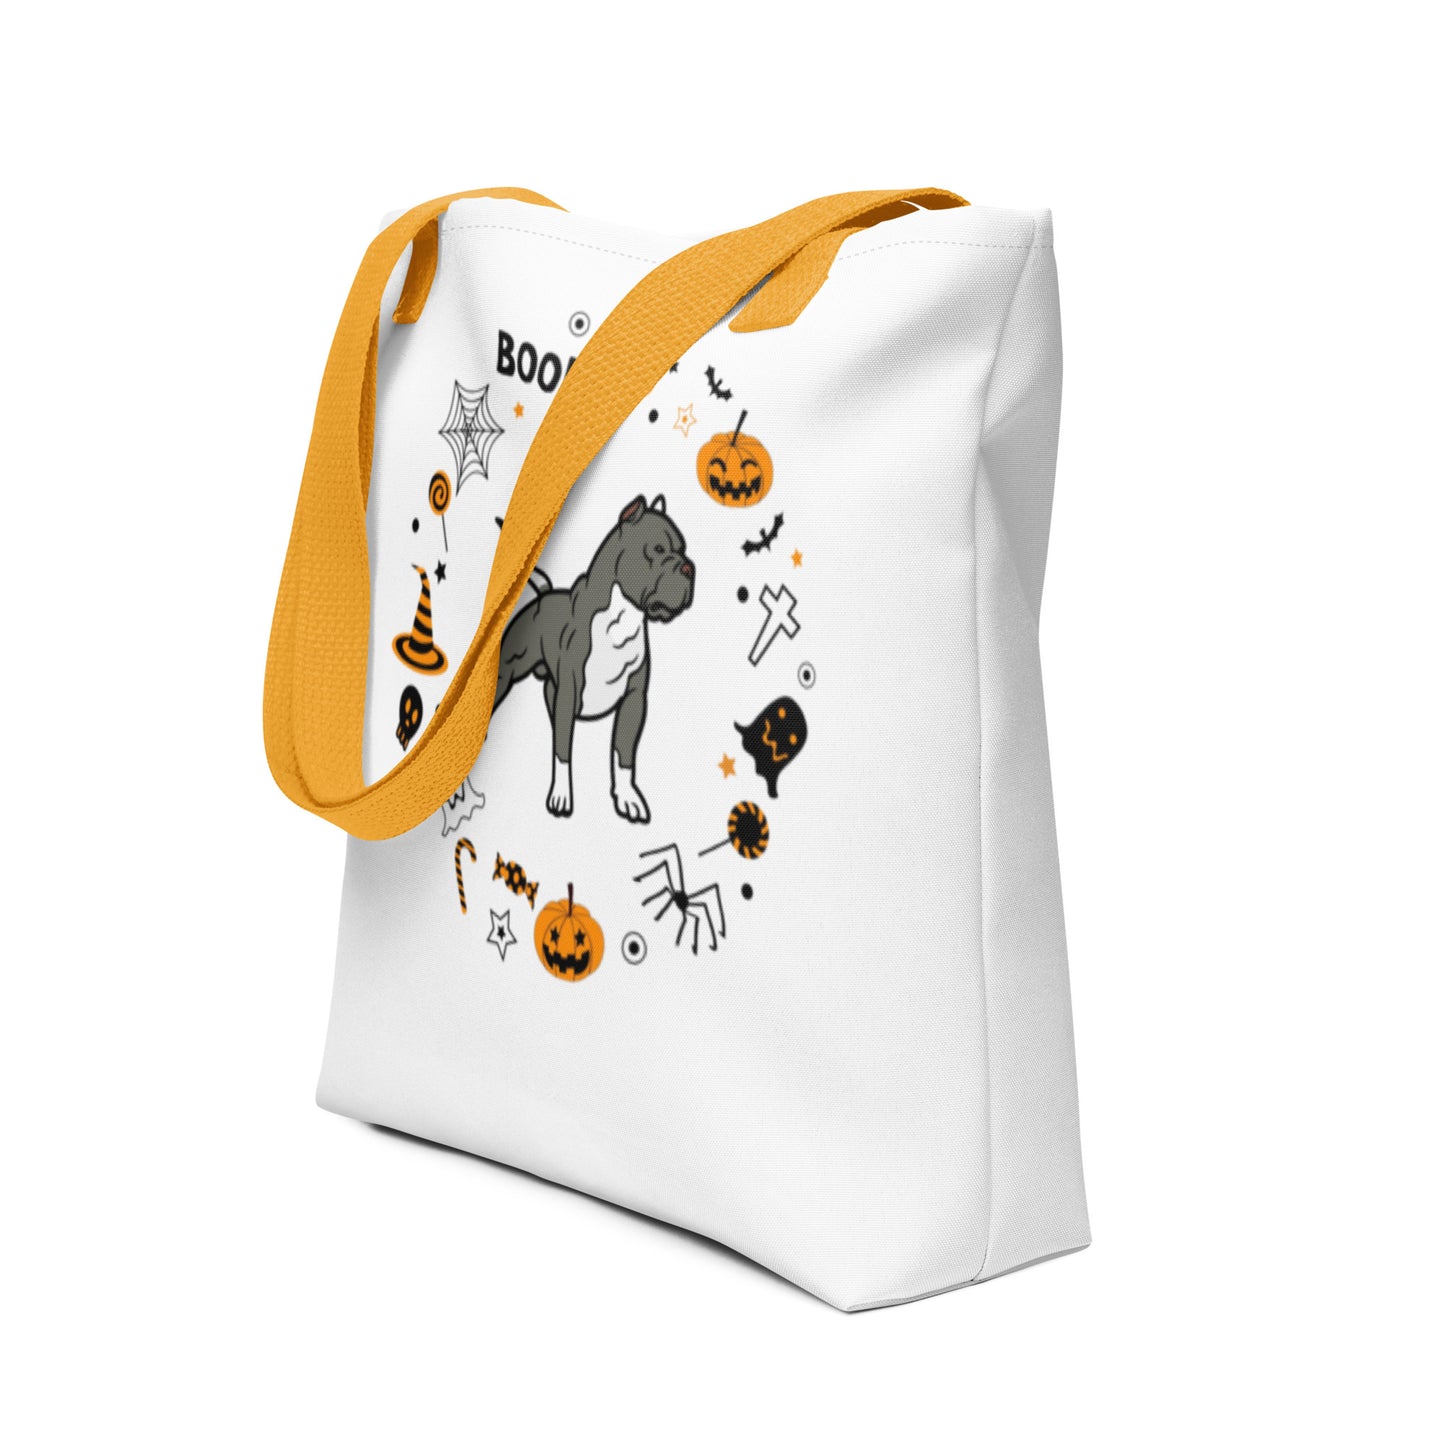 Tote bag for Staffordshire Bull Terrier dog lovers Halloween gift